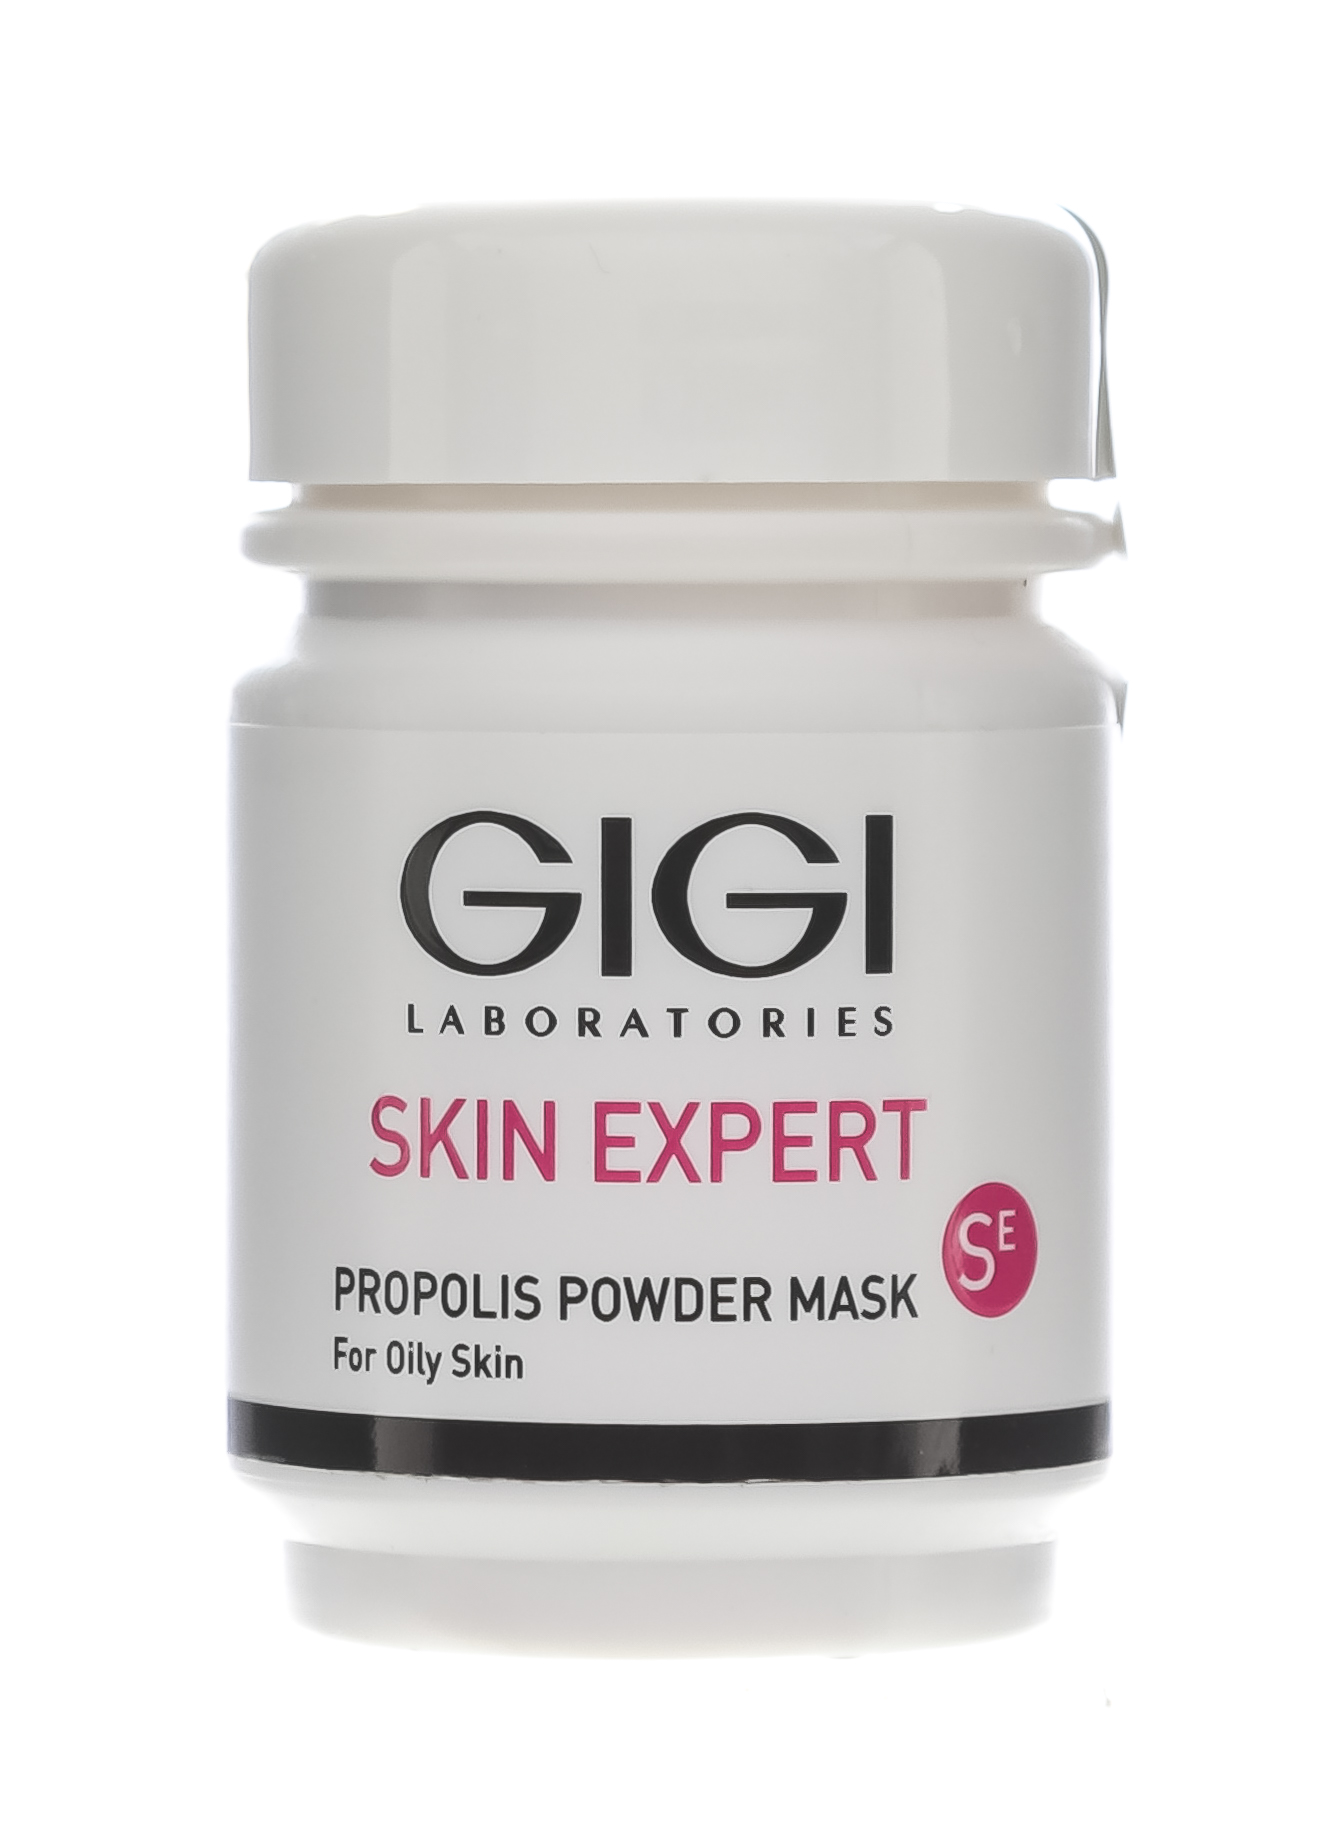 ДжиДжи Пудра прополисная Propolis Poweder Mask, 50 мл (GiGi, Skin Expert) фото 0